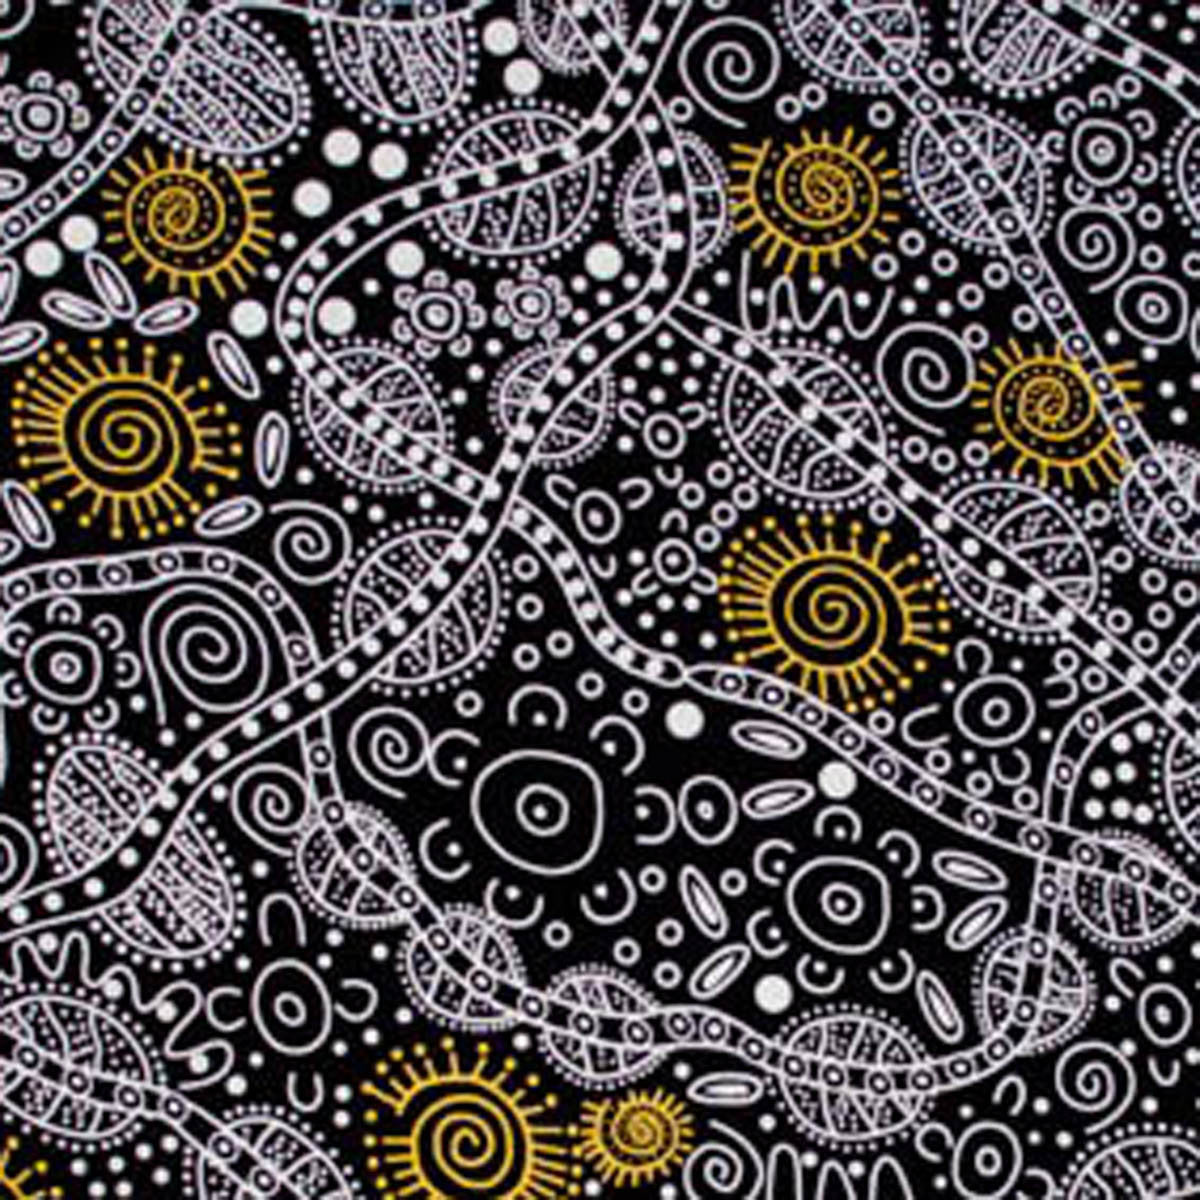 BUSH TUCKER BLACK by Aboriginal Artist JUNE SMITH